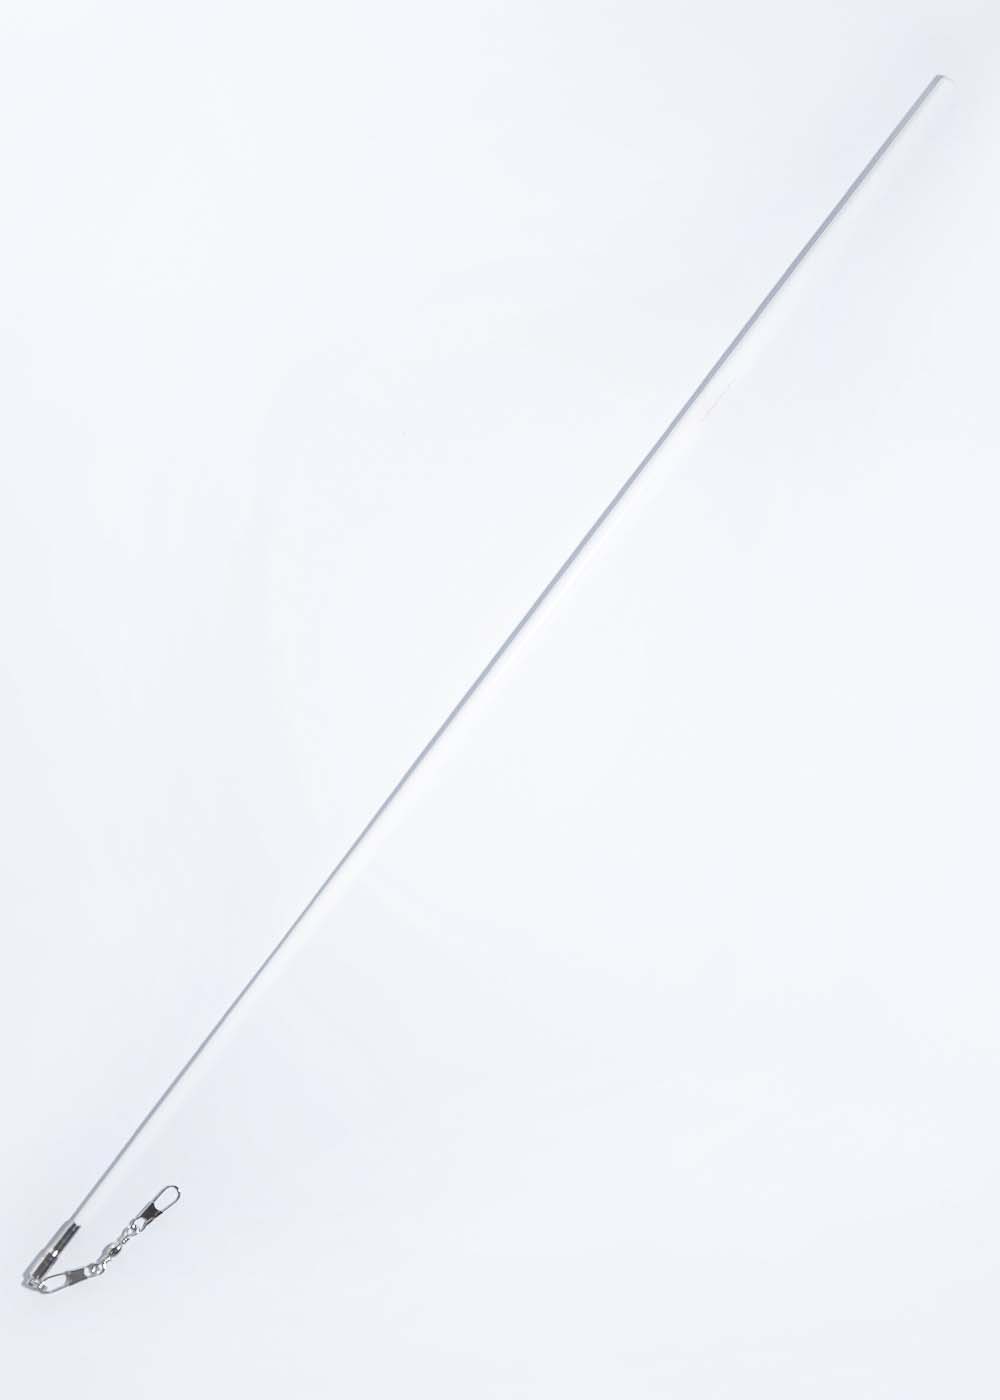 Stick for gymnastics SASAKI NEW FIG MJ-79, 50cm